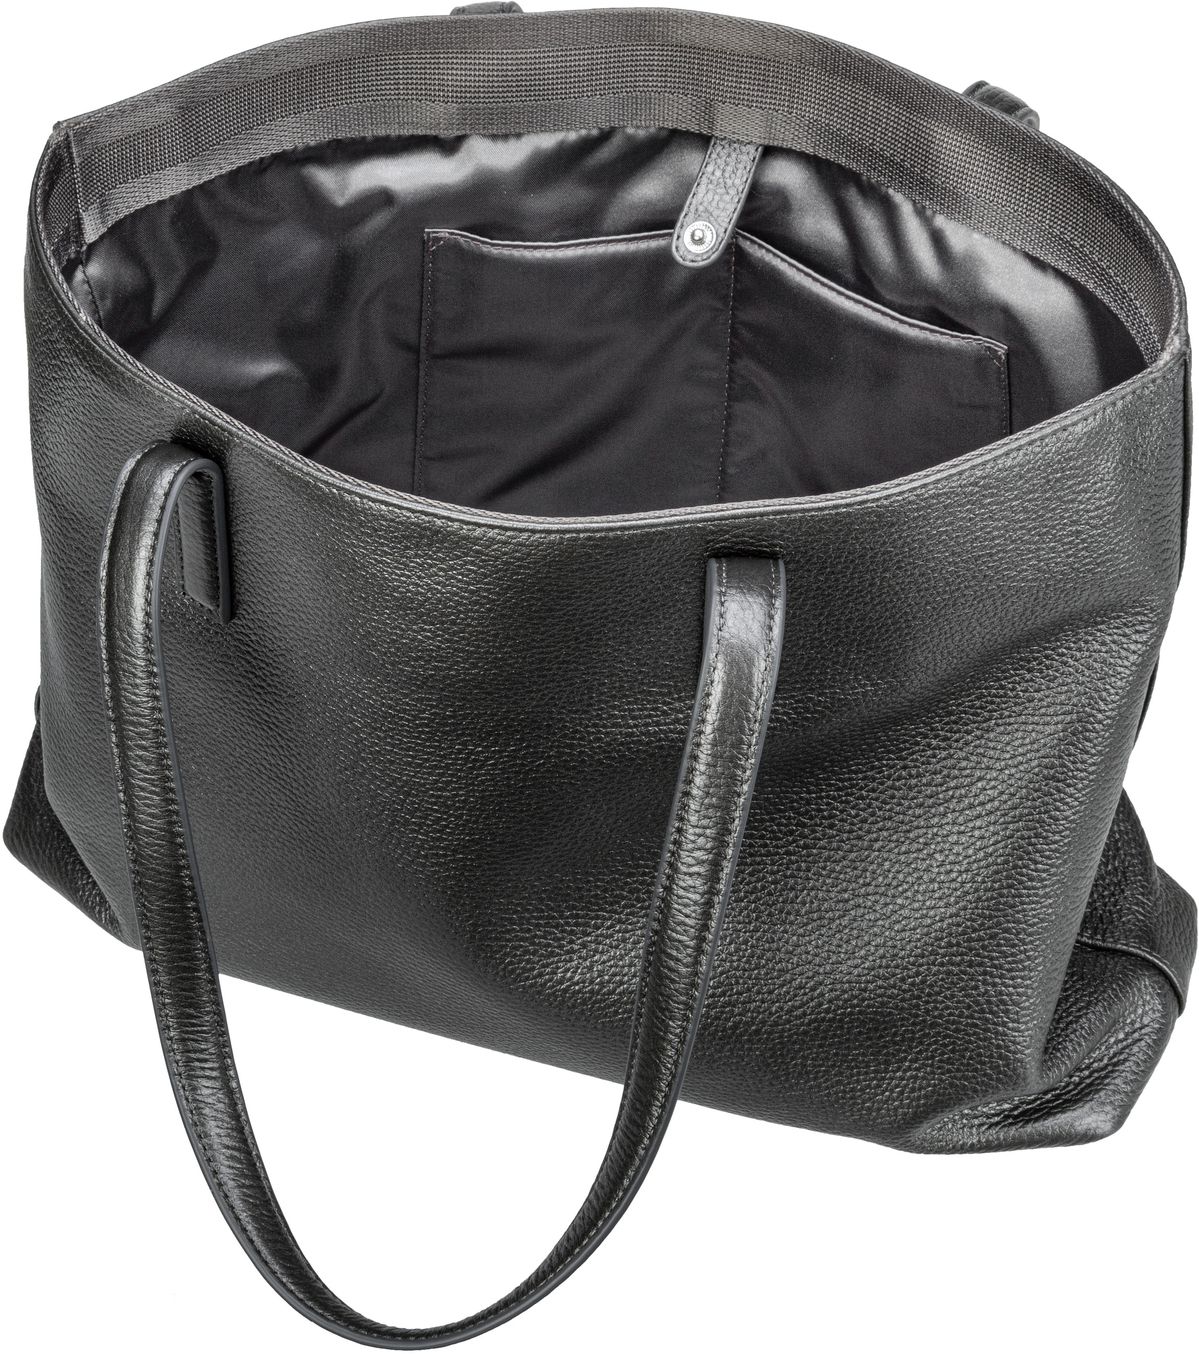 Mandarina Duck Mellow Leather Lux Tote Bag ZLT24 - Graphite